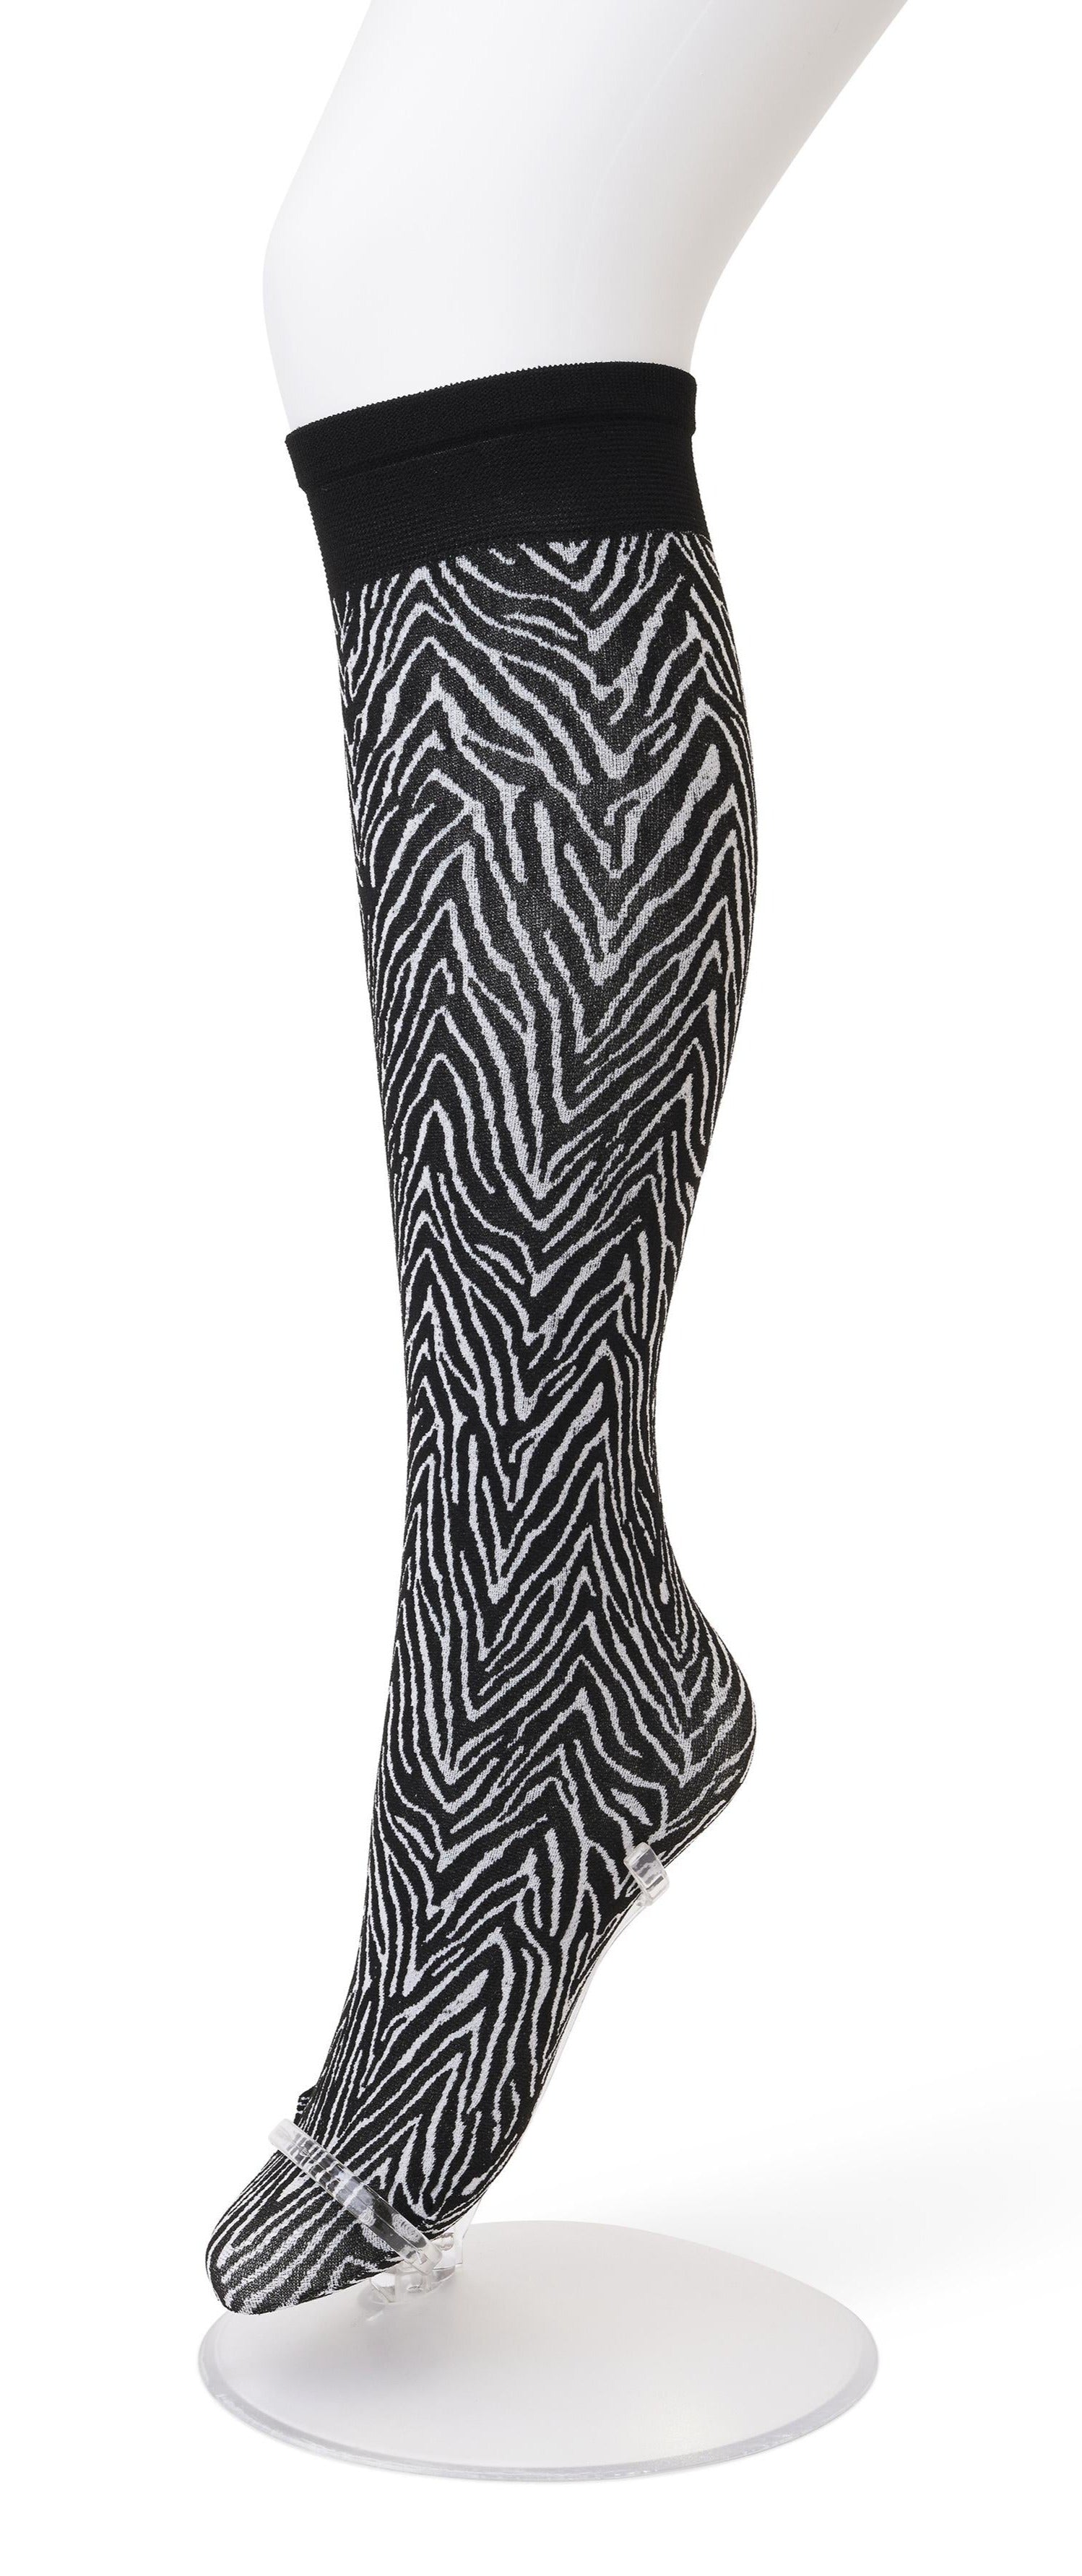 Bonnie Doon BP211509 Minotauro Knee-highs - Black opaque fashion knee-high socks with a linear zebra style pattern in white.Bonnie Doon BP211509 Minotauro Knee-highs - Black opaque fashion knee-high socks with a linear zebra style pattern in white.